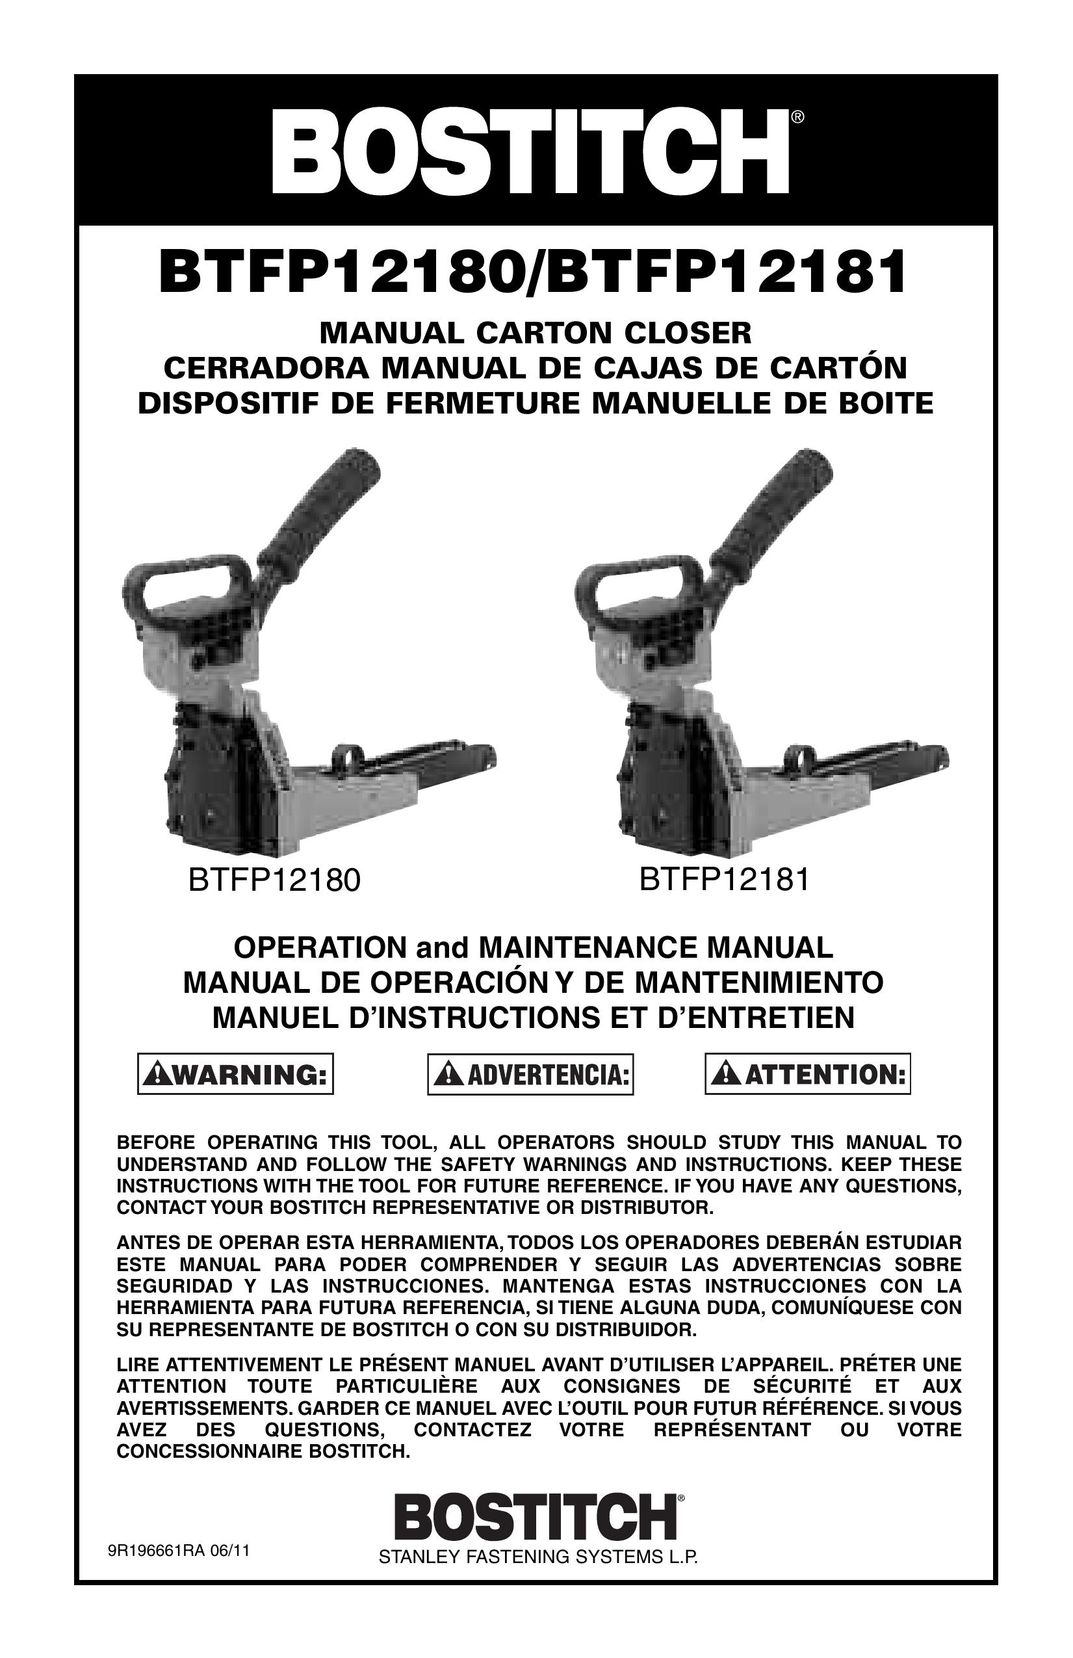 Bostitch BTFP12181 Staple Gun User Manual